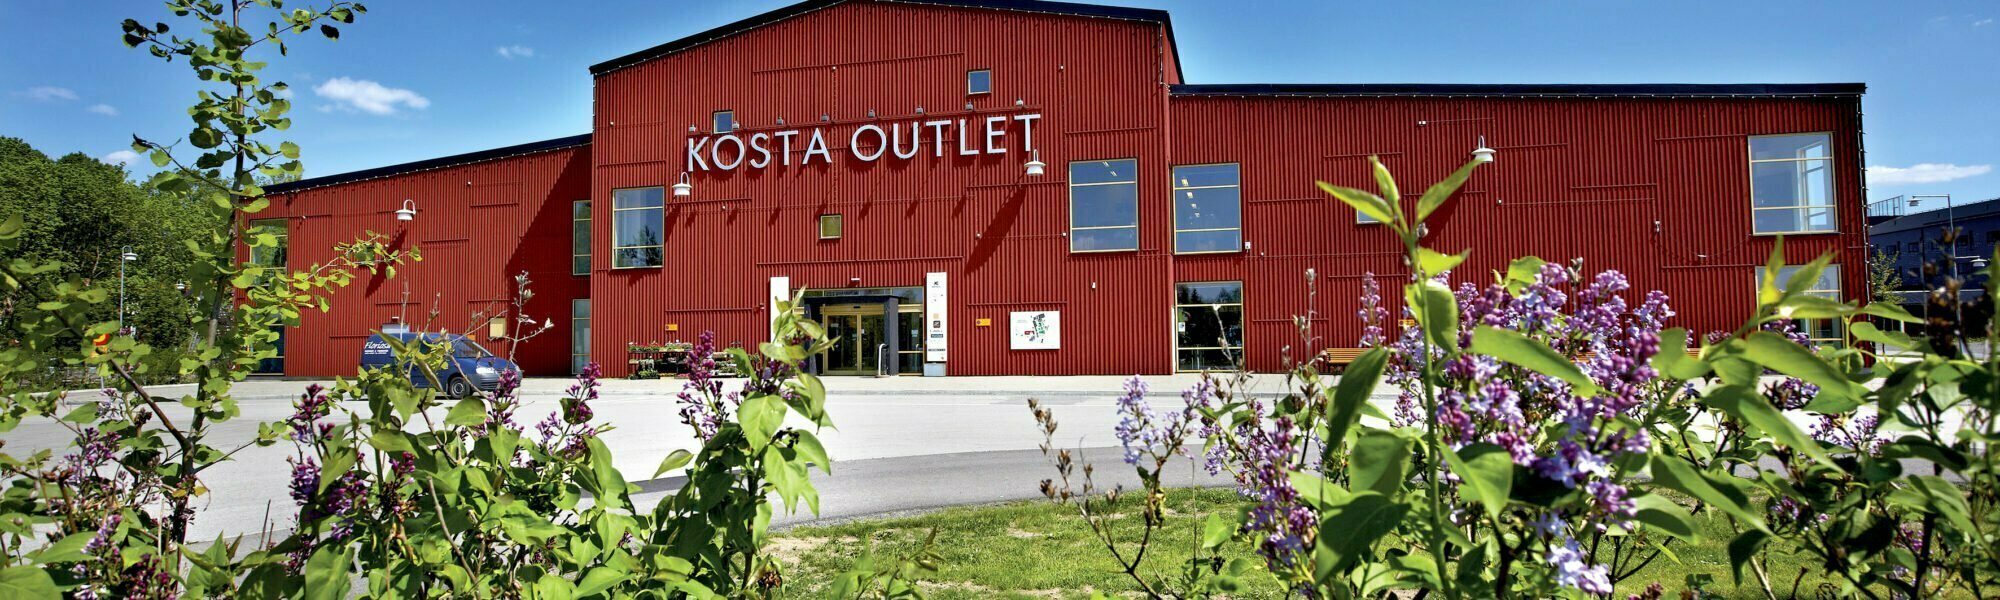 Bilder på butiker på Kosta Outlet.
Foto Mats Samuelsson.